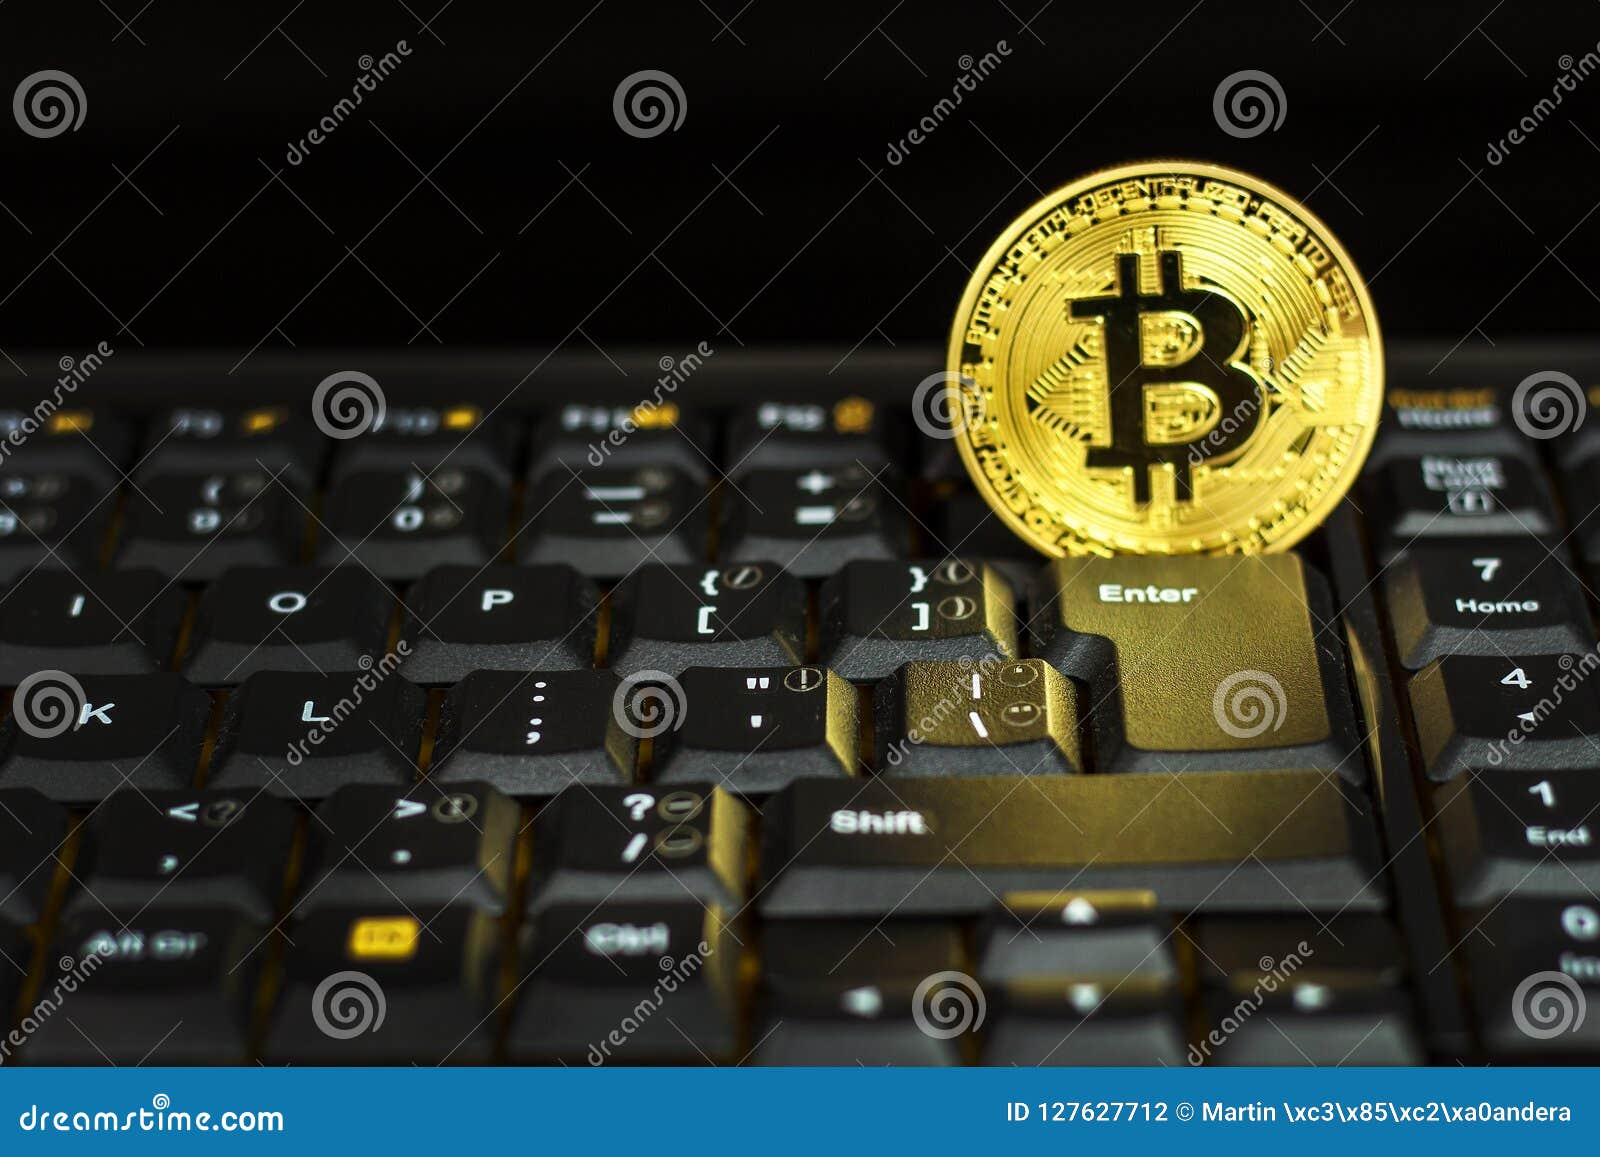 Bitcoin On A Black Computer Keyboard. E-commerce. Virtual ...